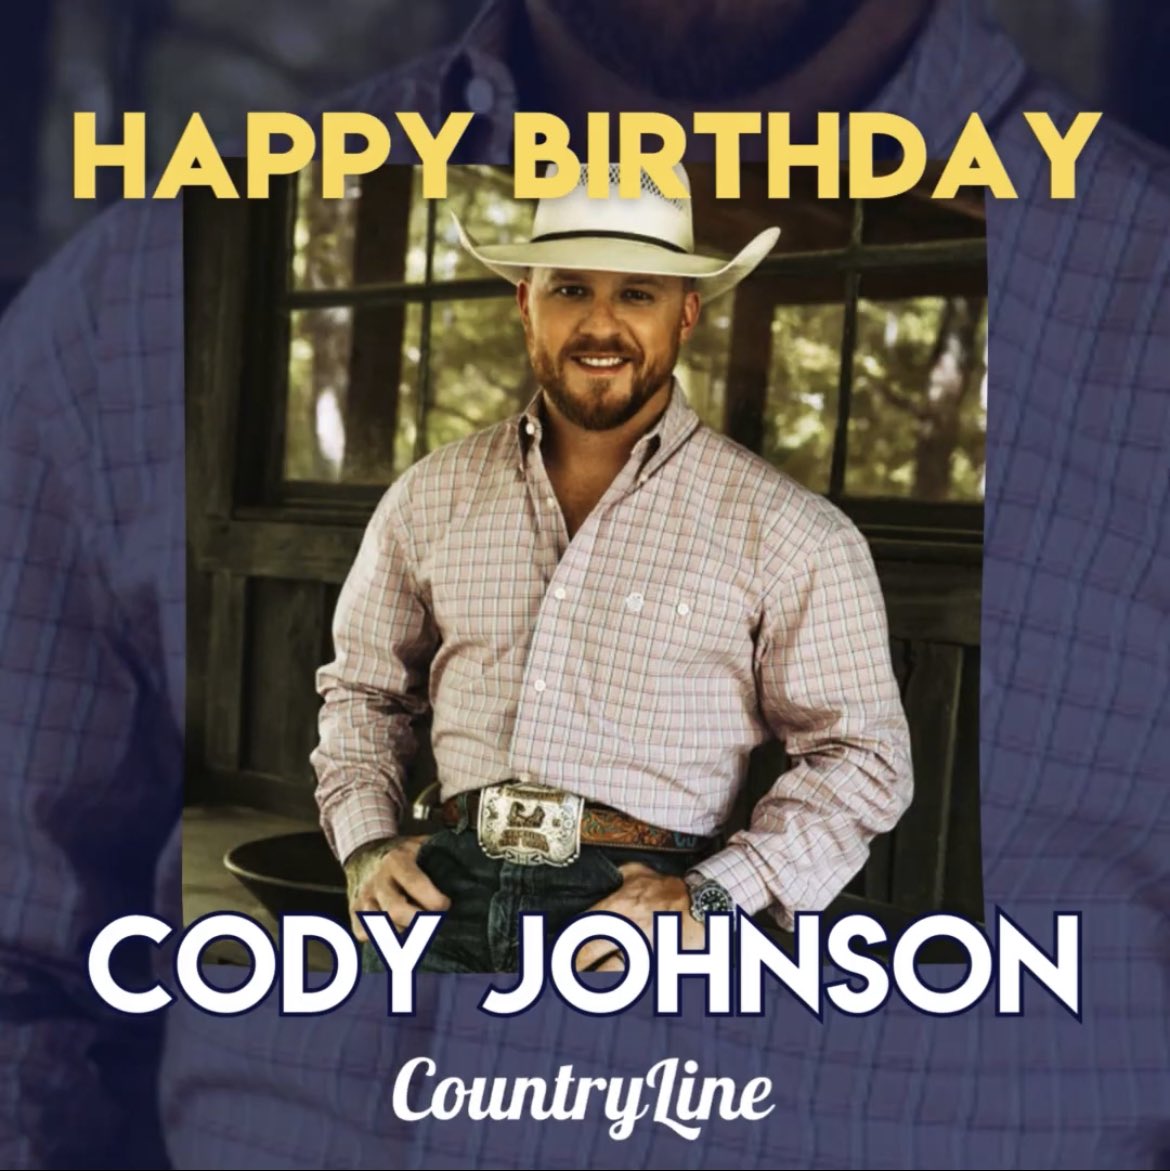 Happy birthday @codyjohnson! 🎉 What’s your favourite Cody Johnson song?